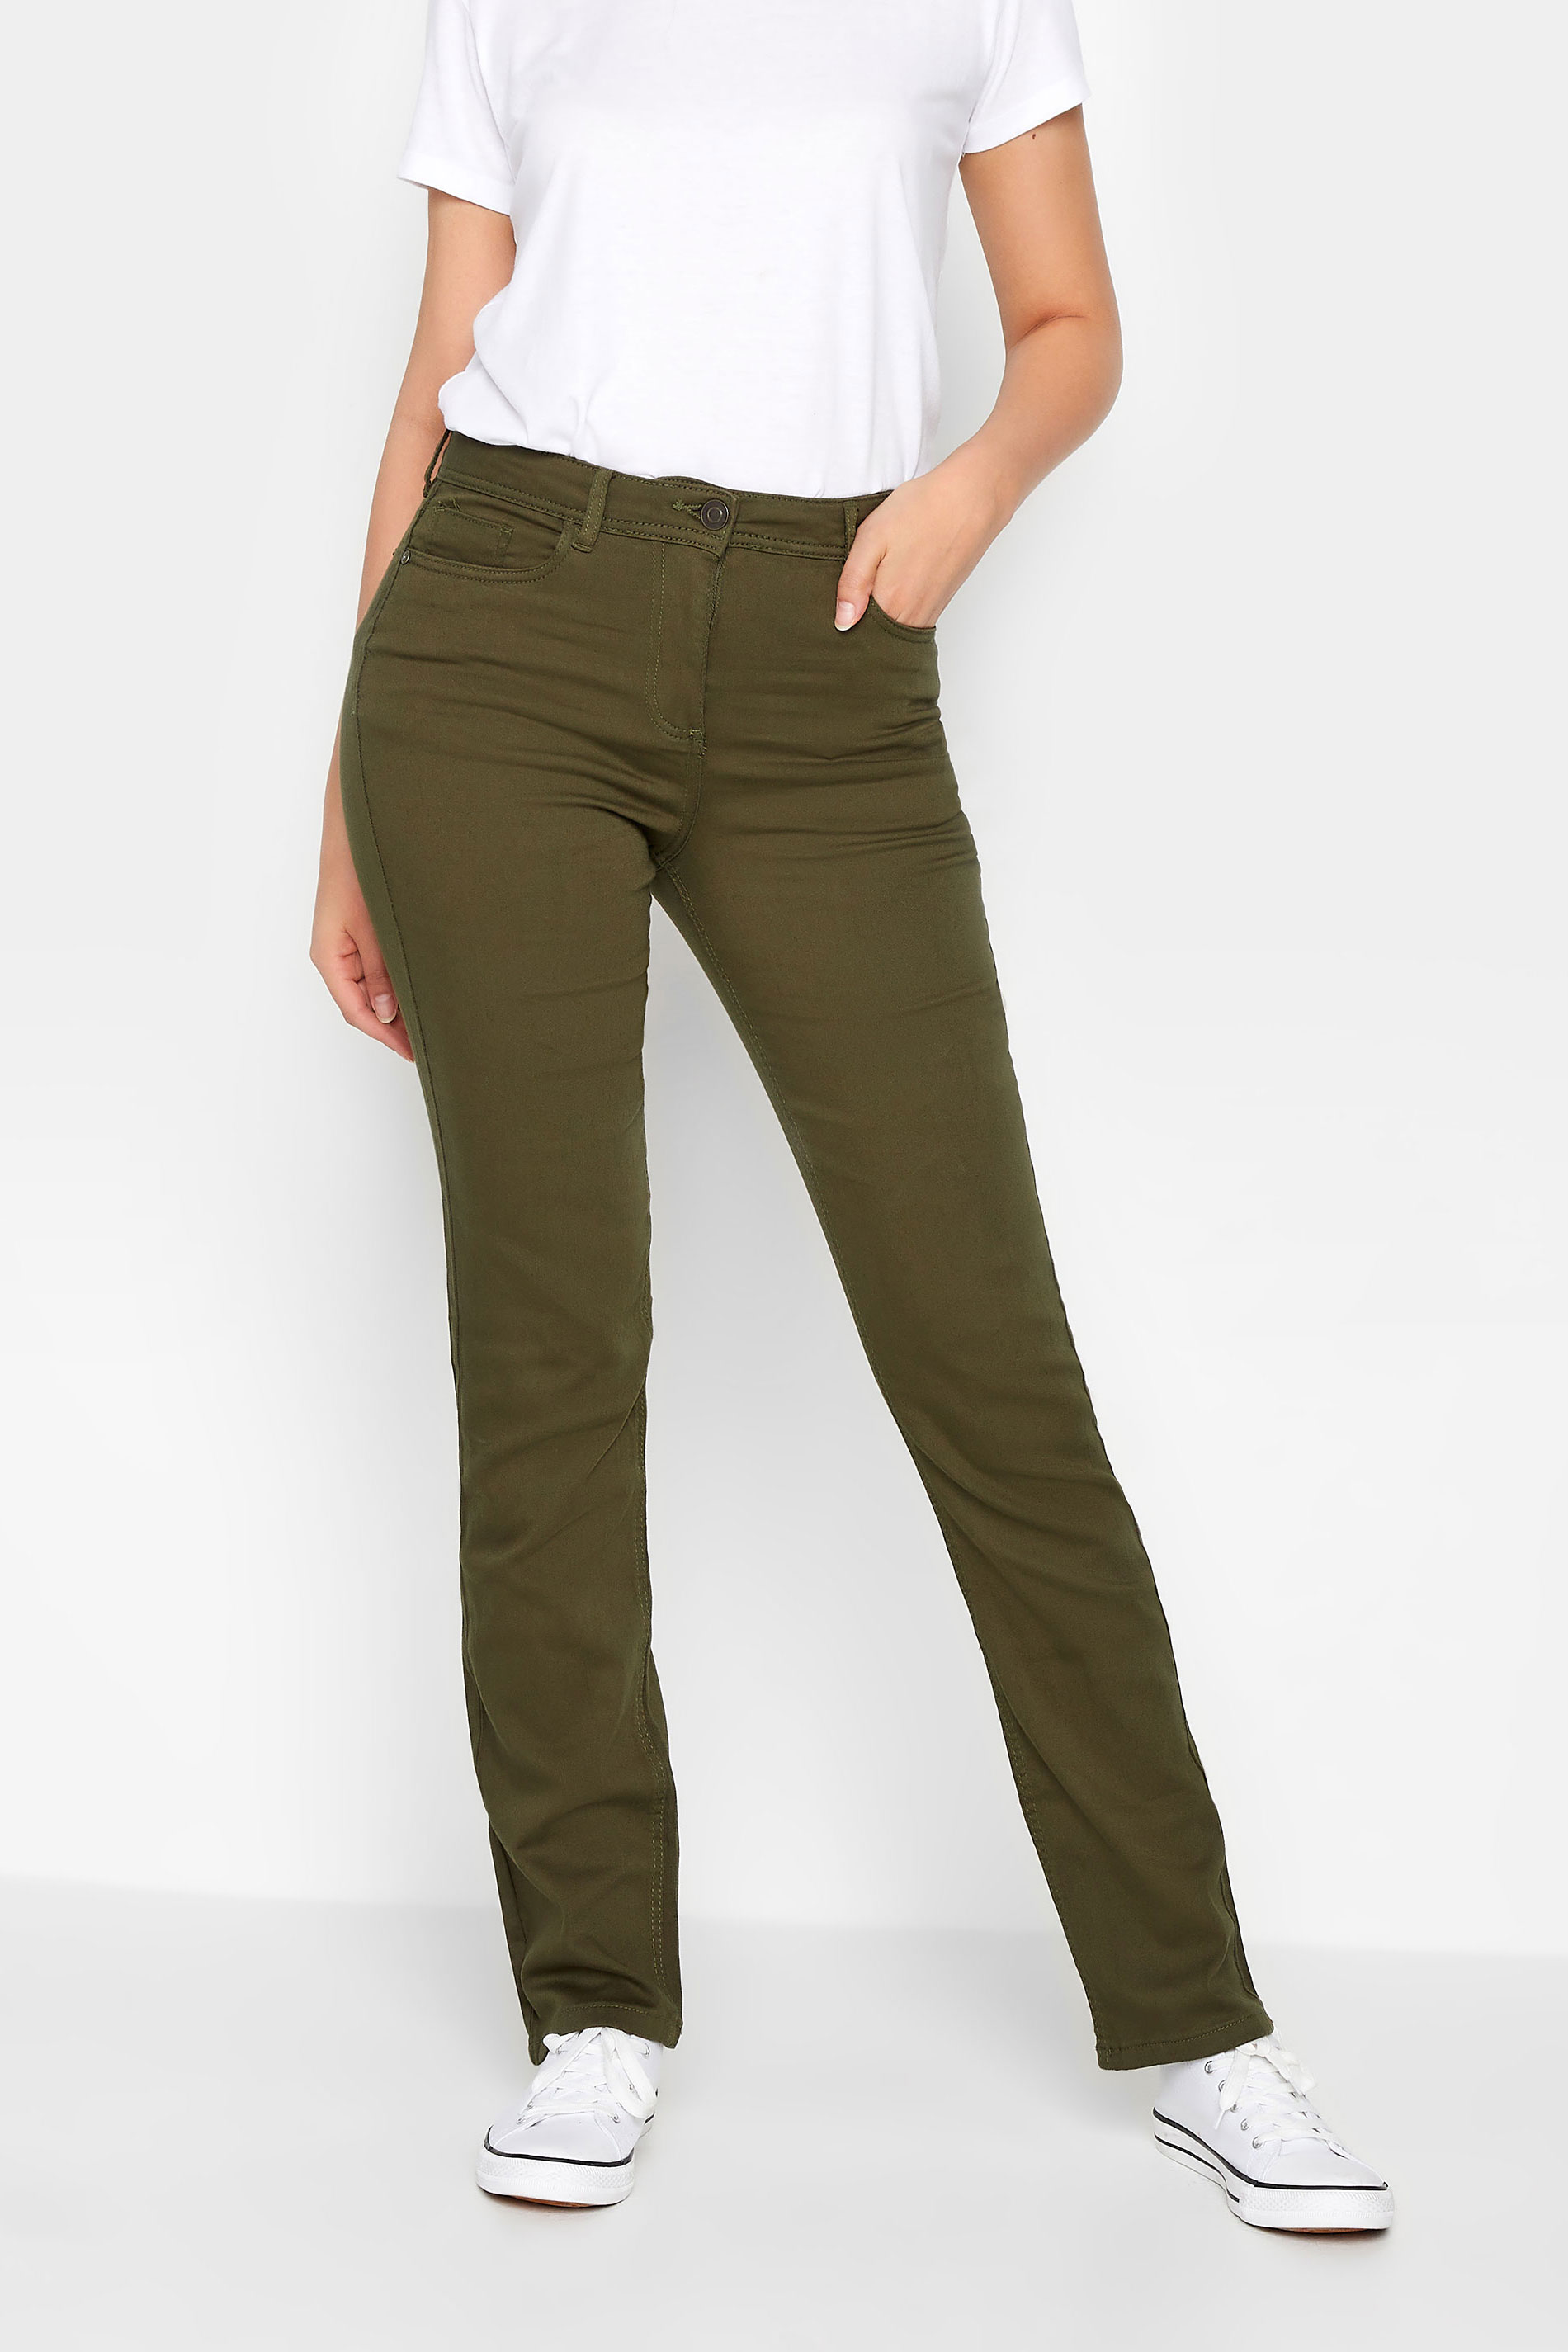 Tall Women's Khaki Green IVY Straight Leg Jeans | Long Tall Sally  1